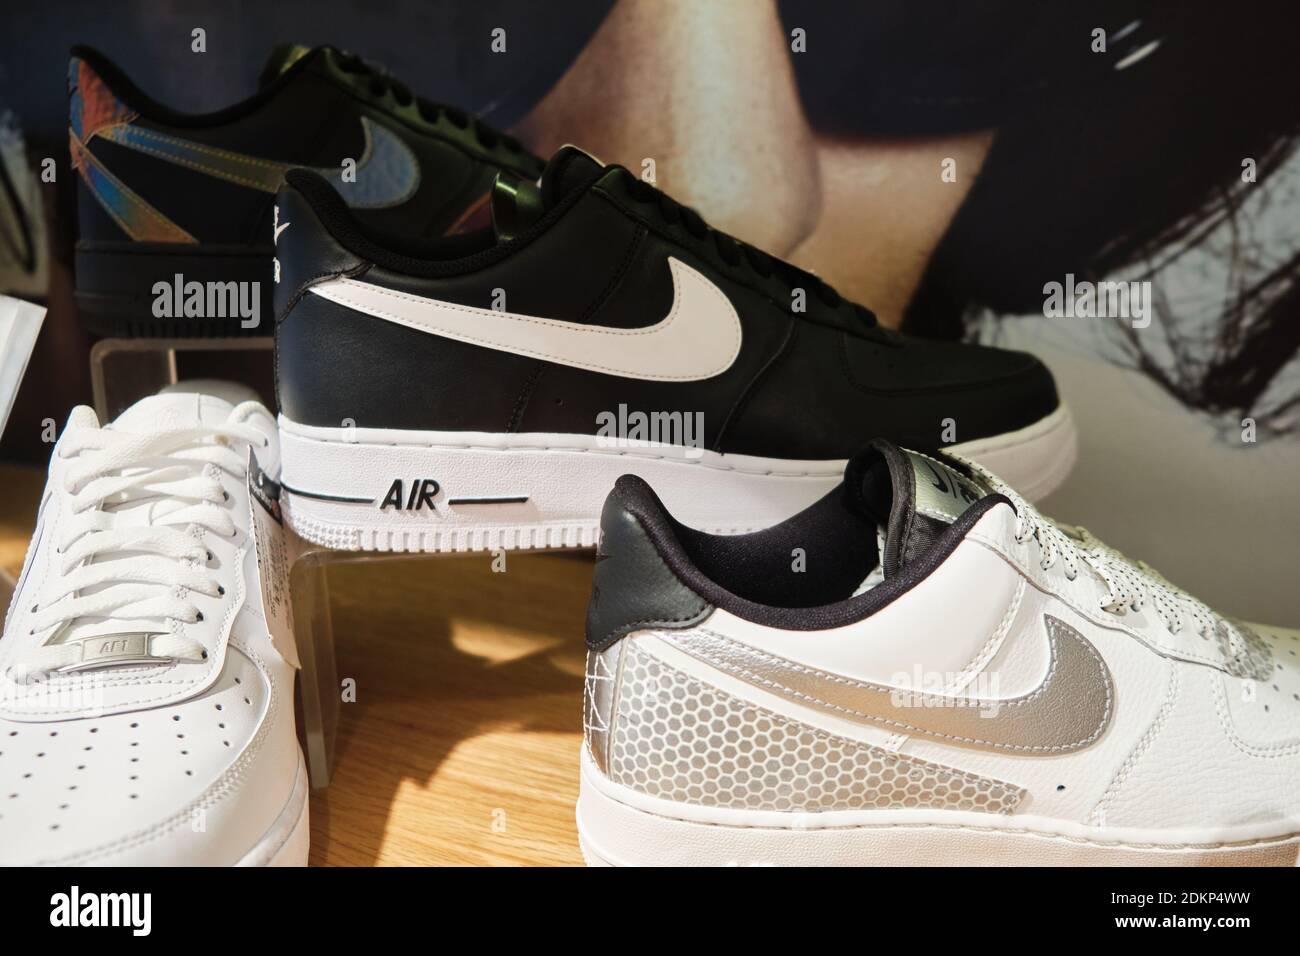 Nike Air Force One Sneaker im Ladenregal. Mersin, Türkei - November 2020  Stockfotografie - Alamy